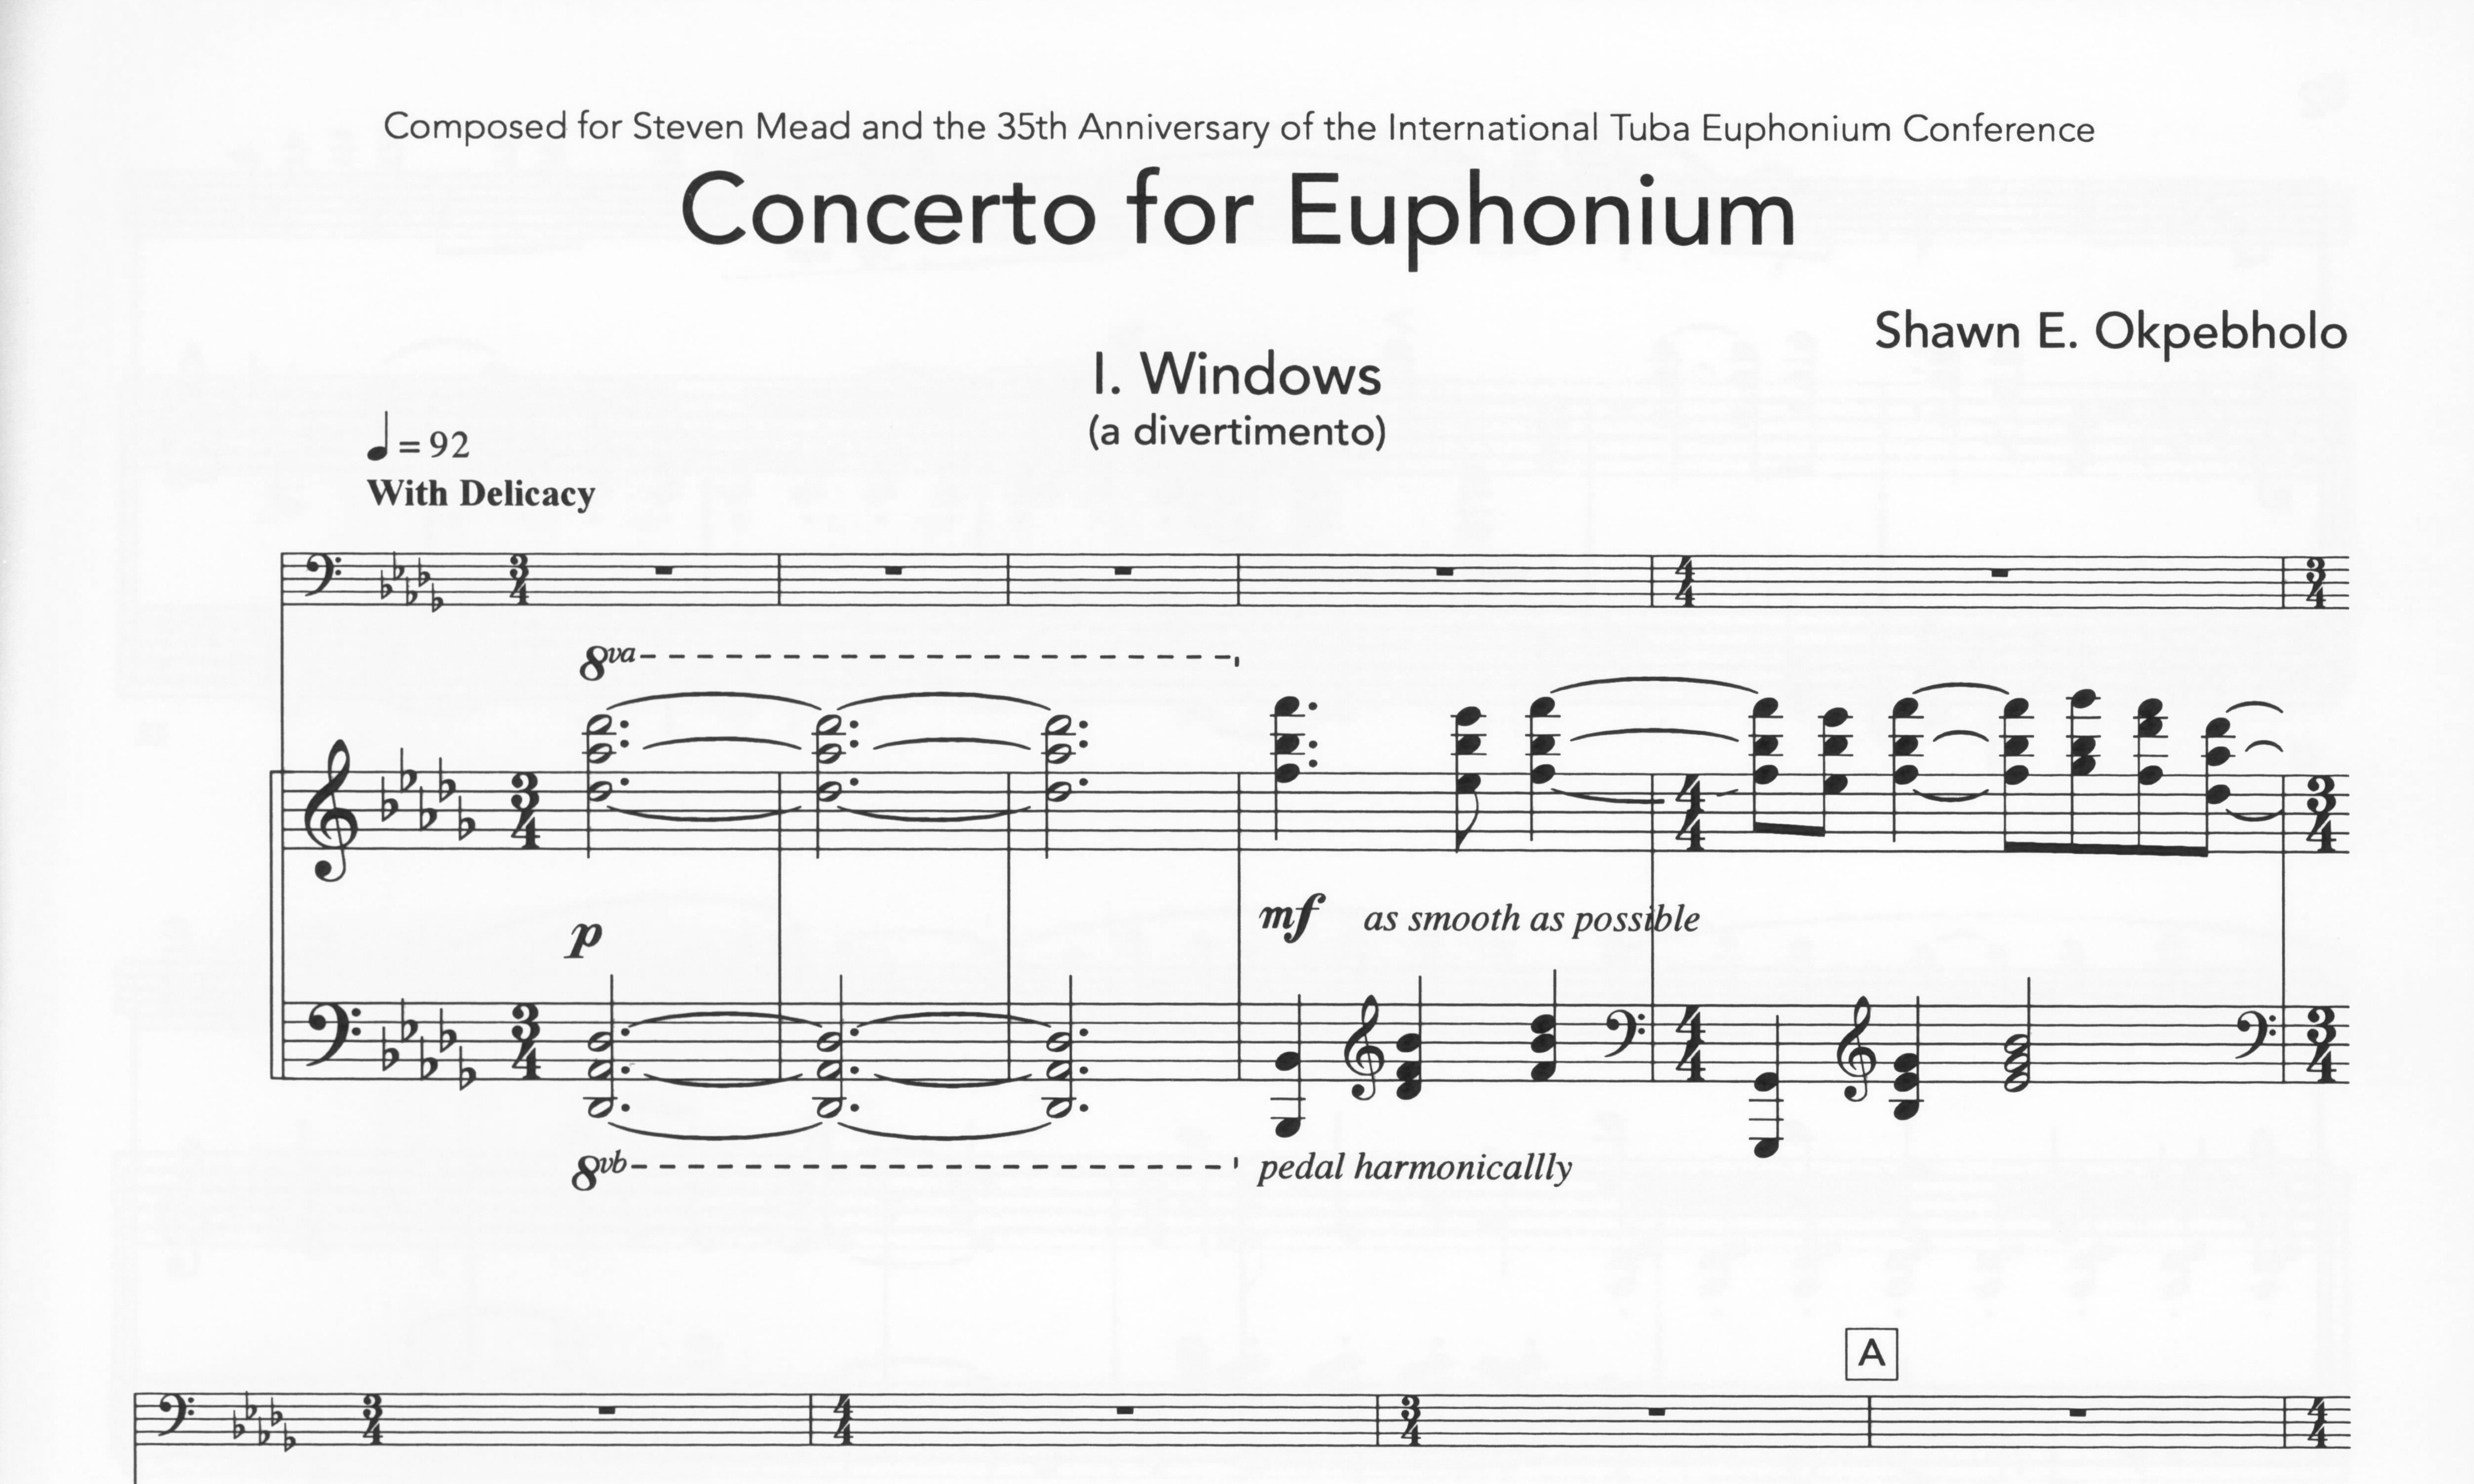 Concerto for Euphonium - Shawn E. Okpebholo